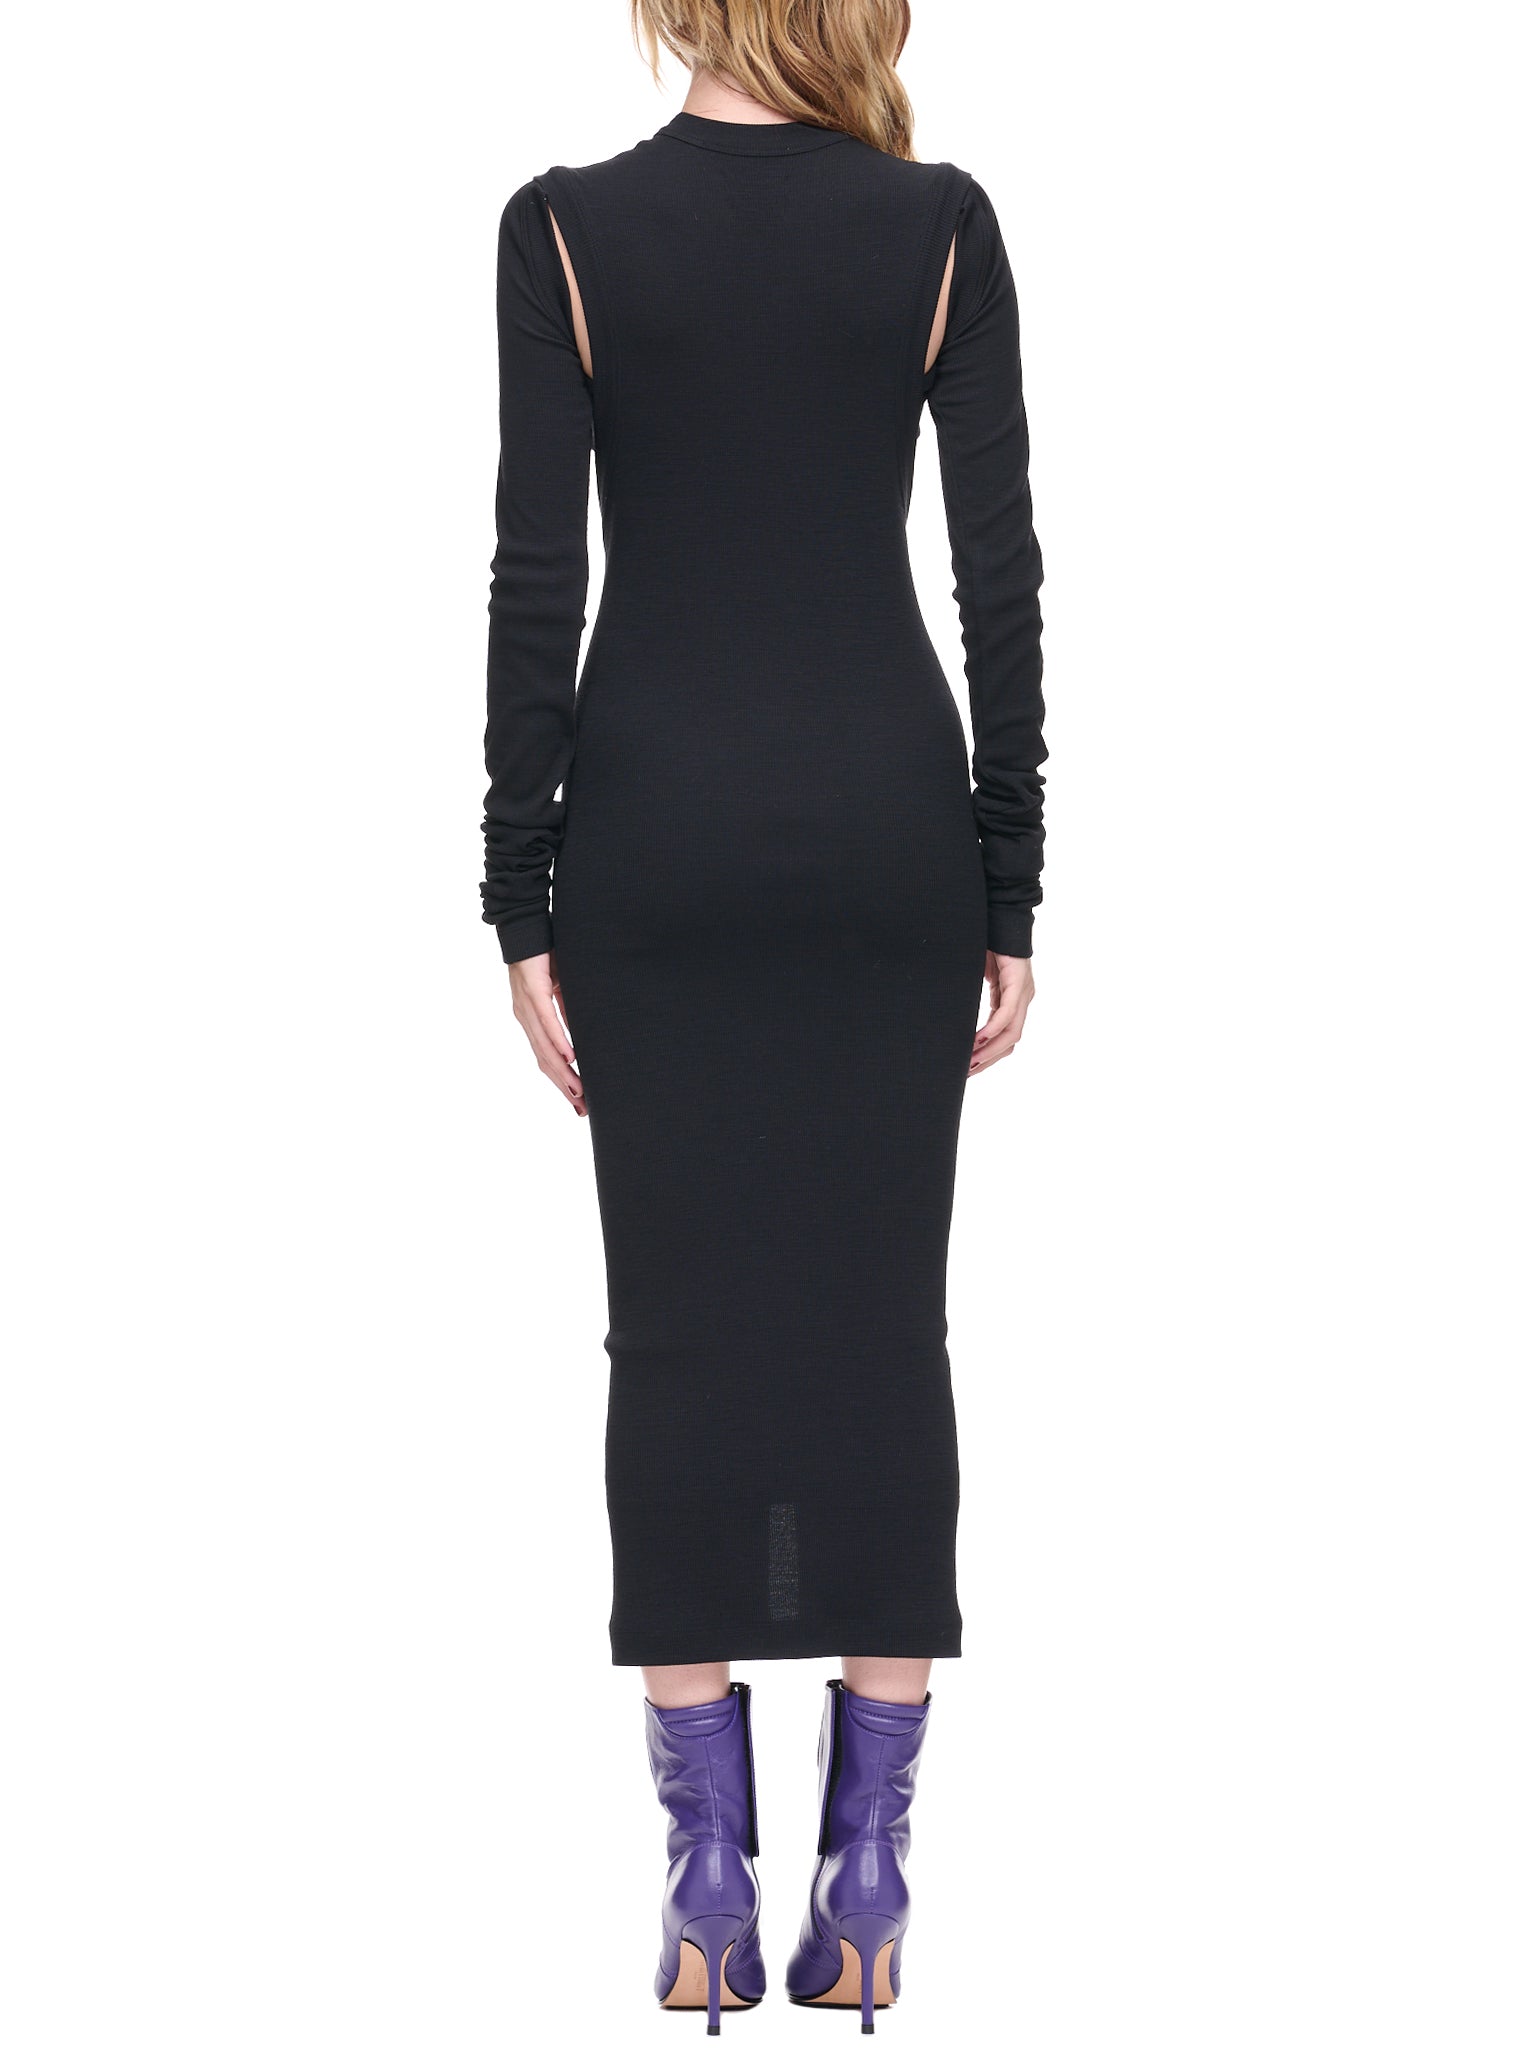 Two Layer Dress (Q517RW-BLACK)